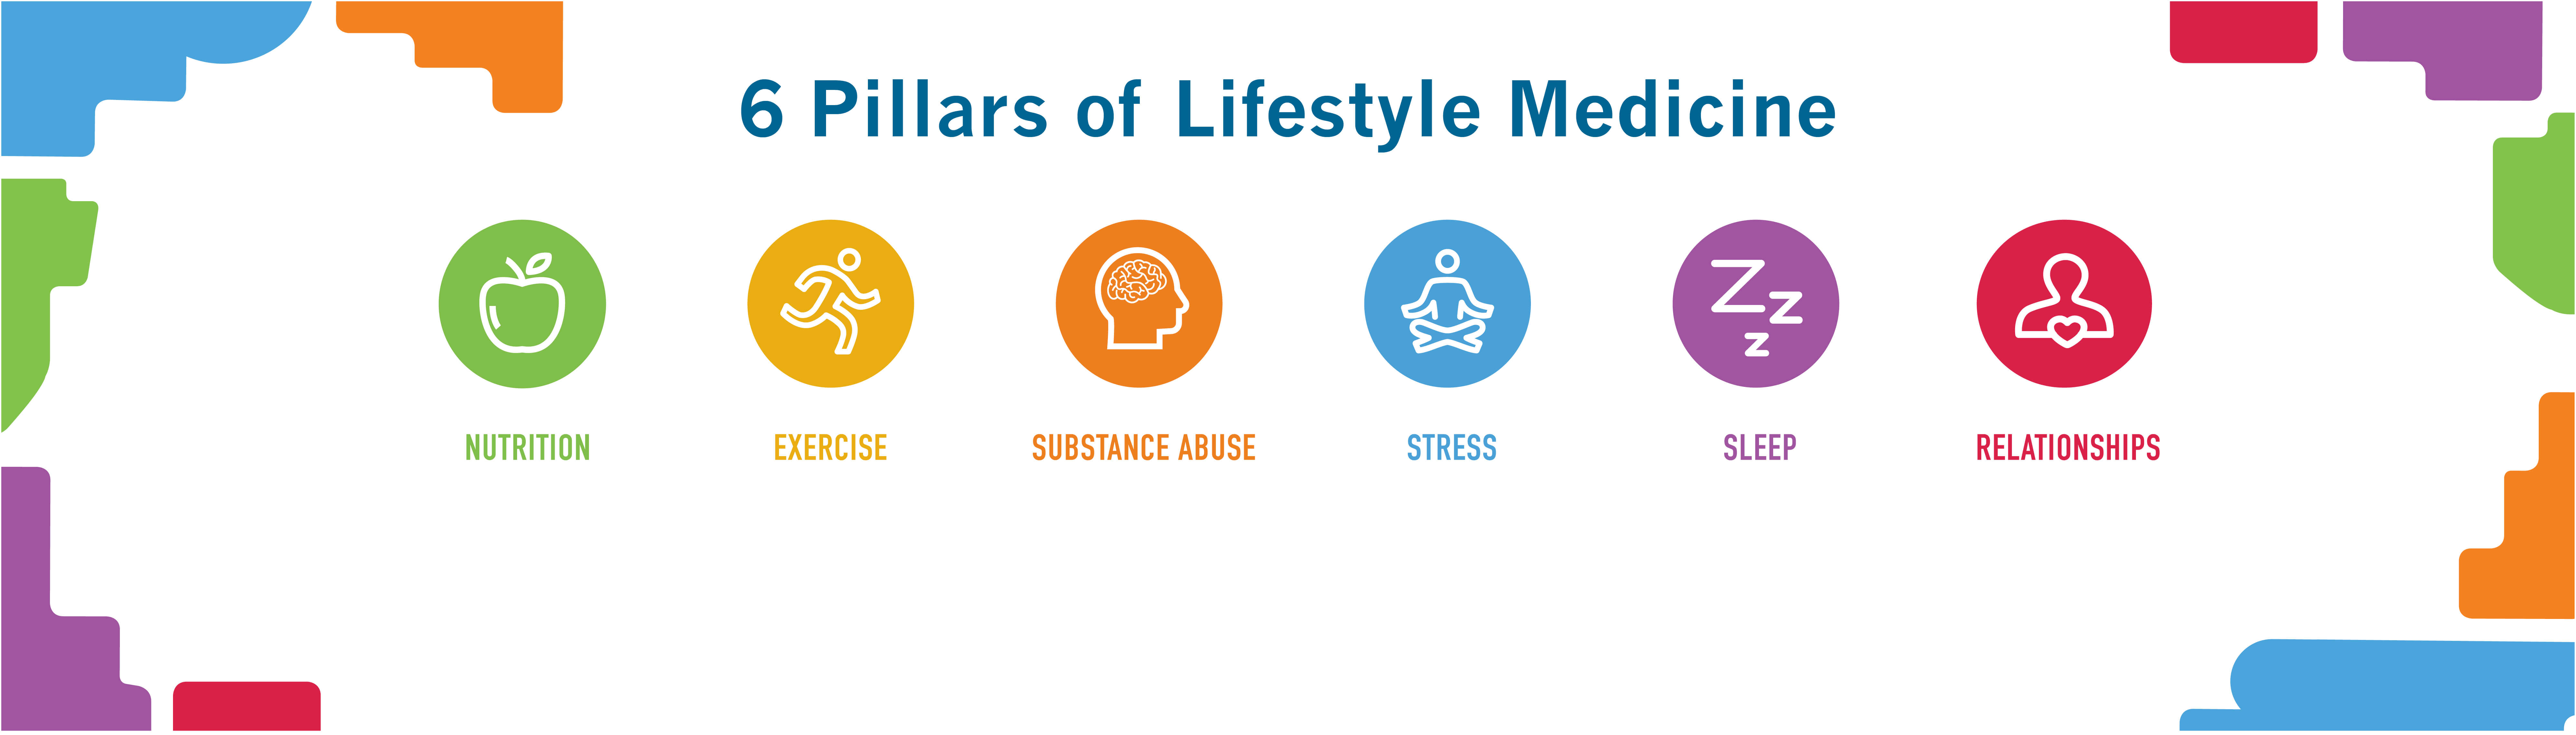 6 Pillars of Lifestyle Medicine 